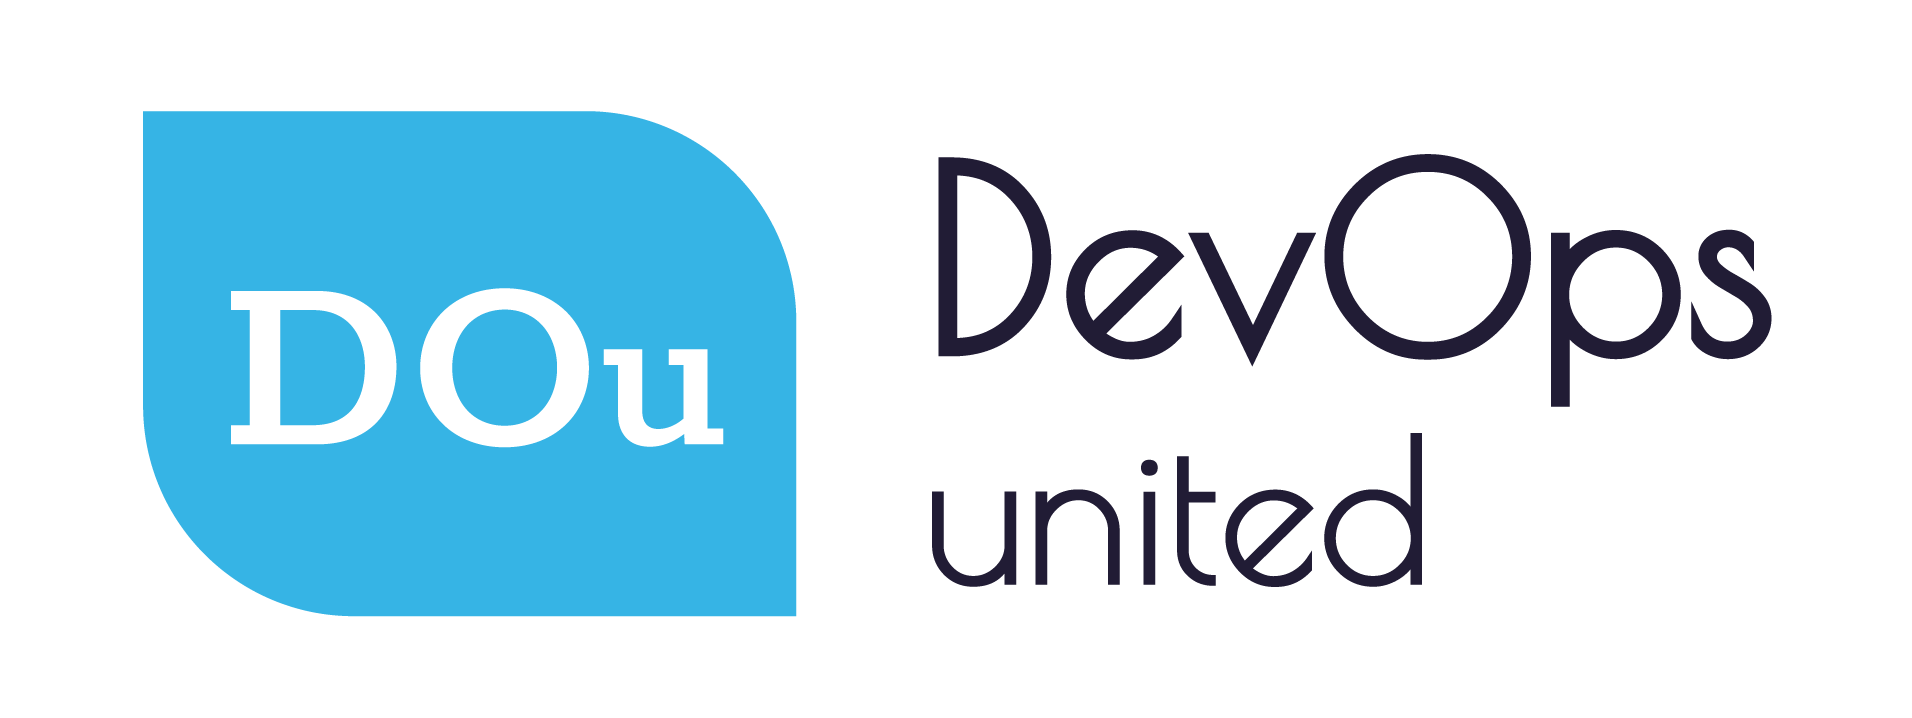 DevOps United (DoU)